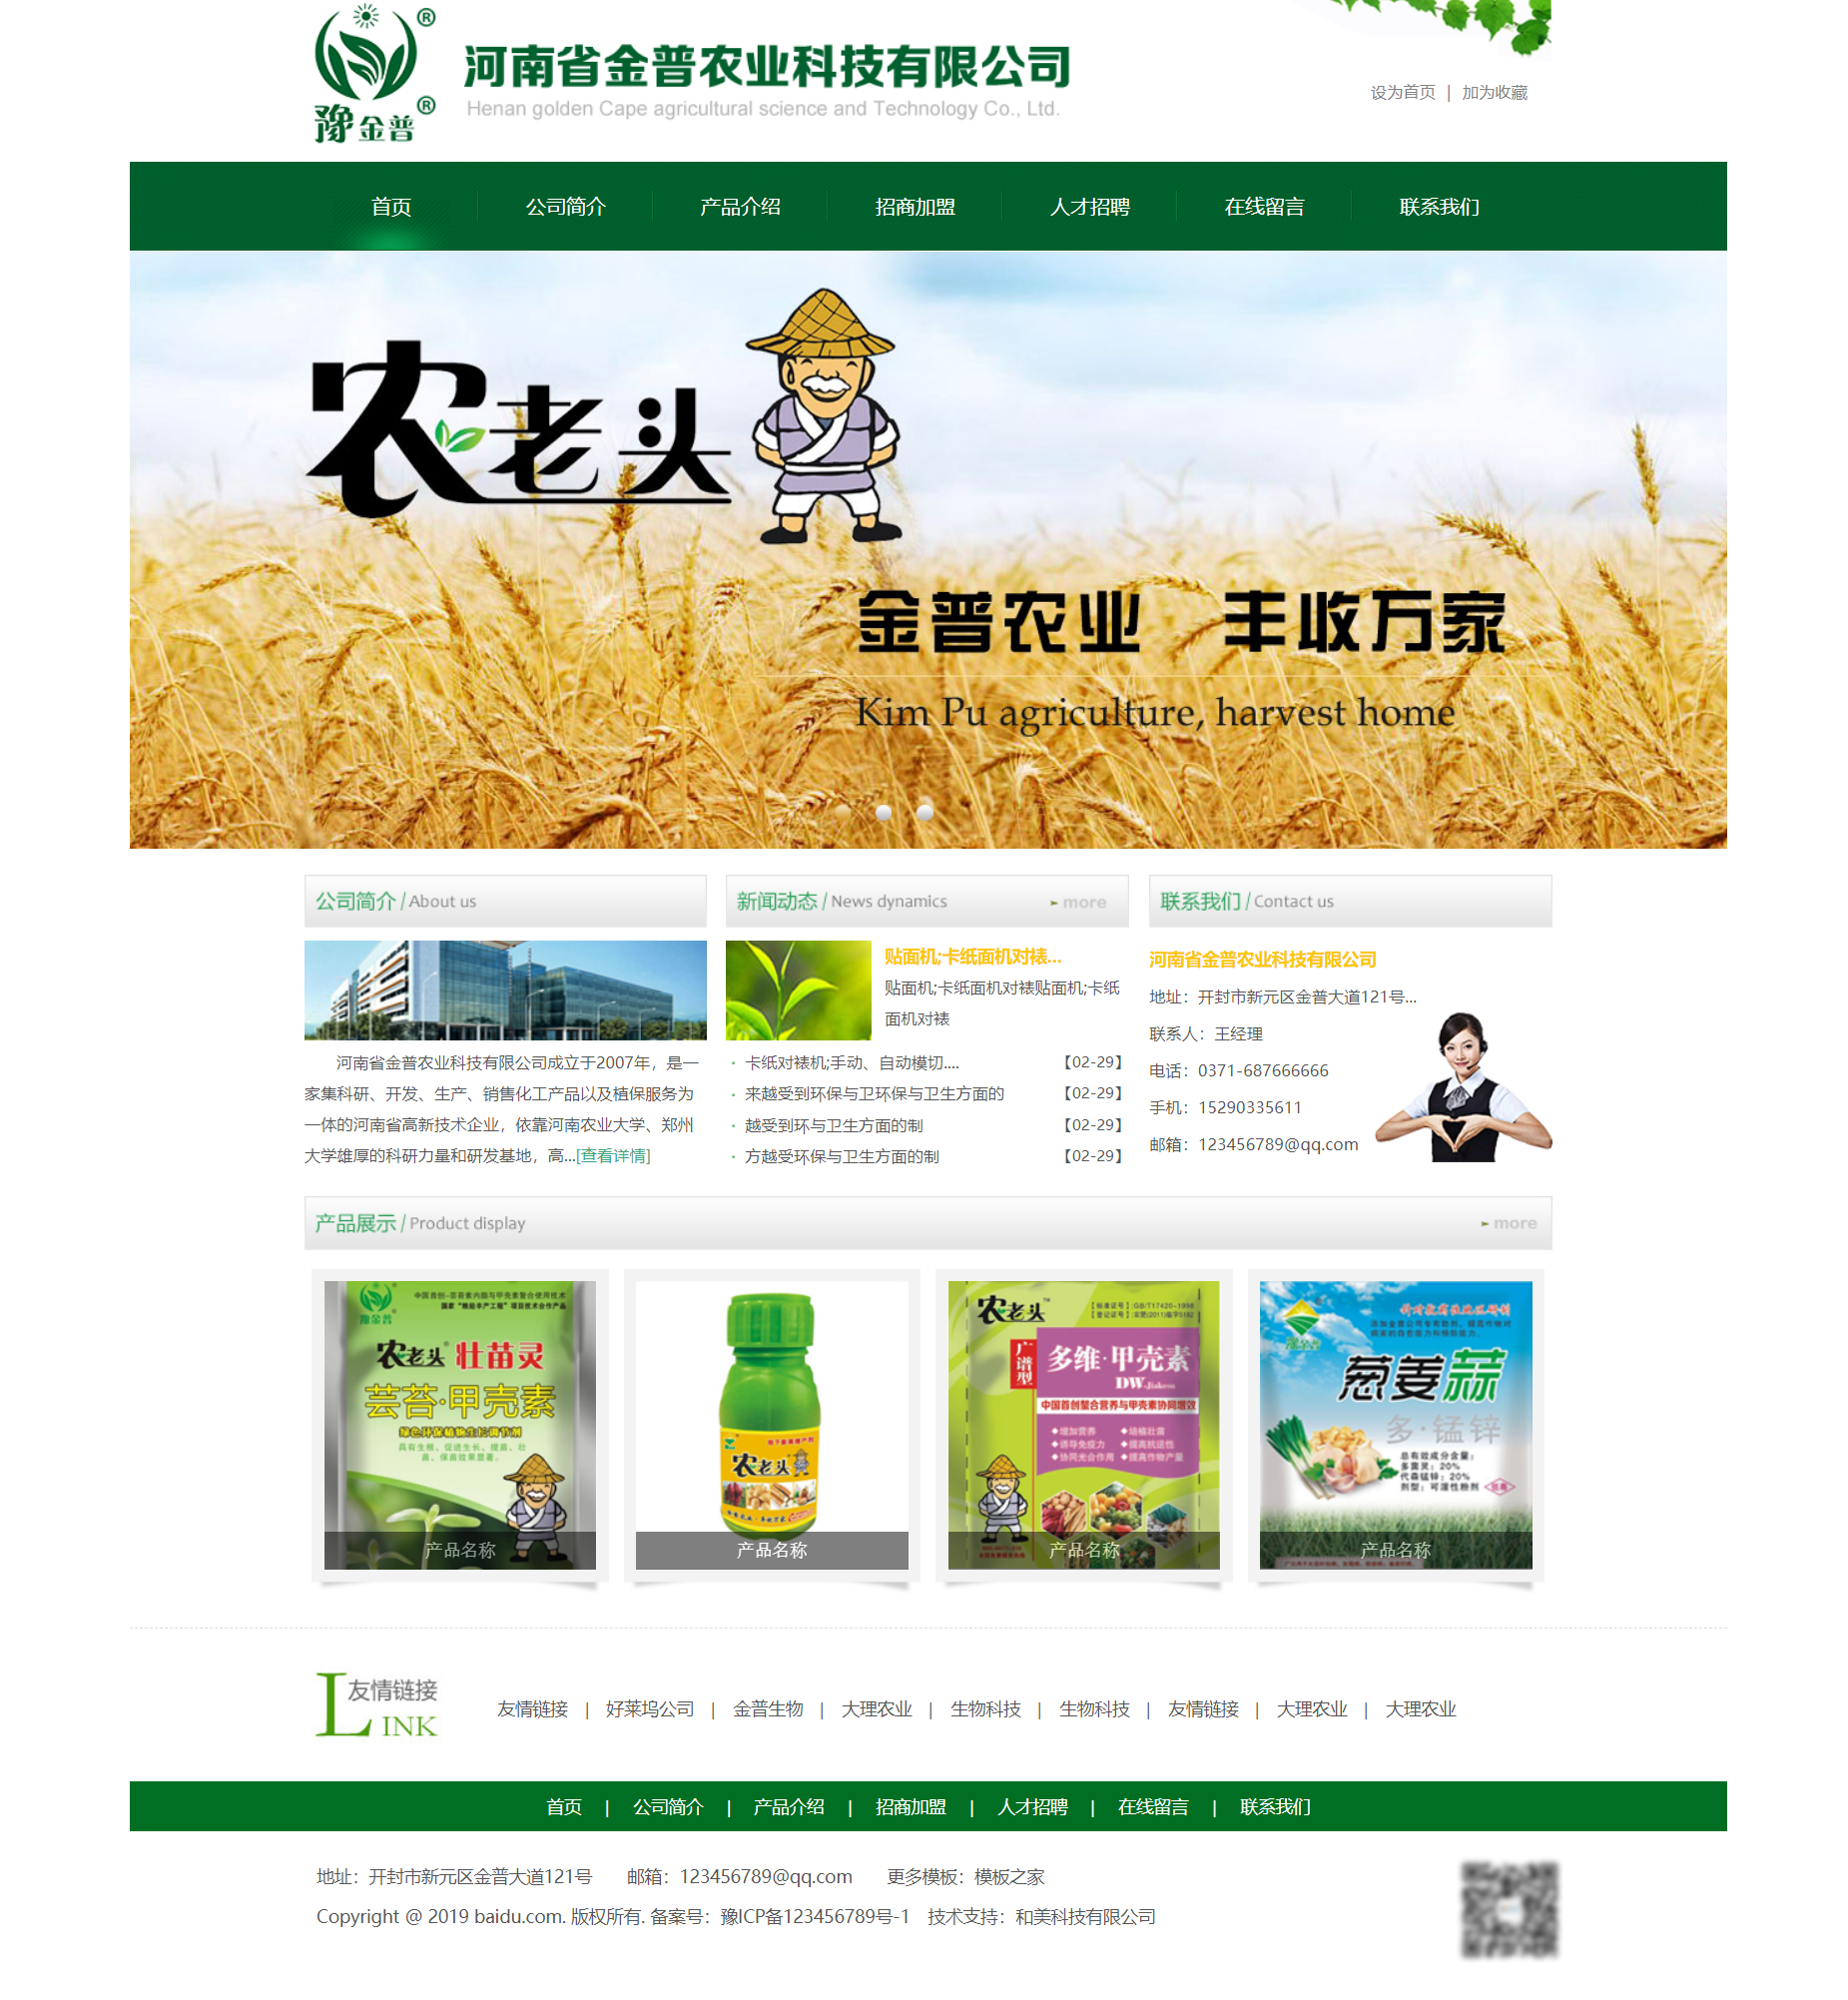 HTML5绿色宽屏样式农业生产科技企业网站模板代码下载